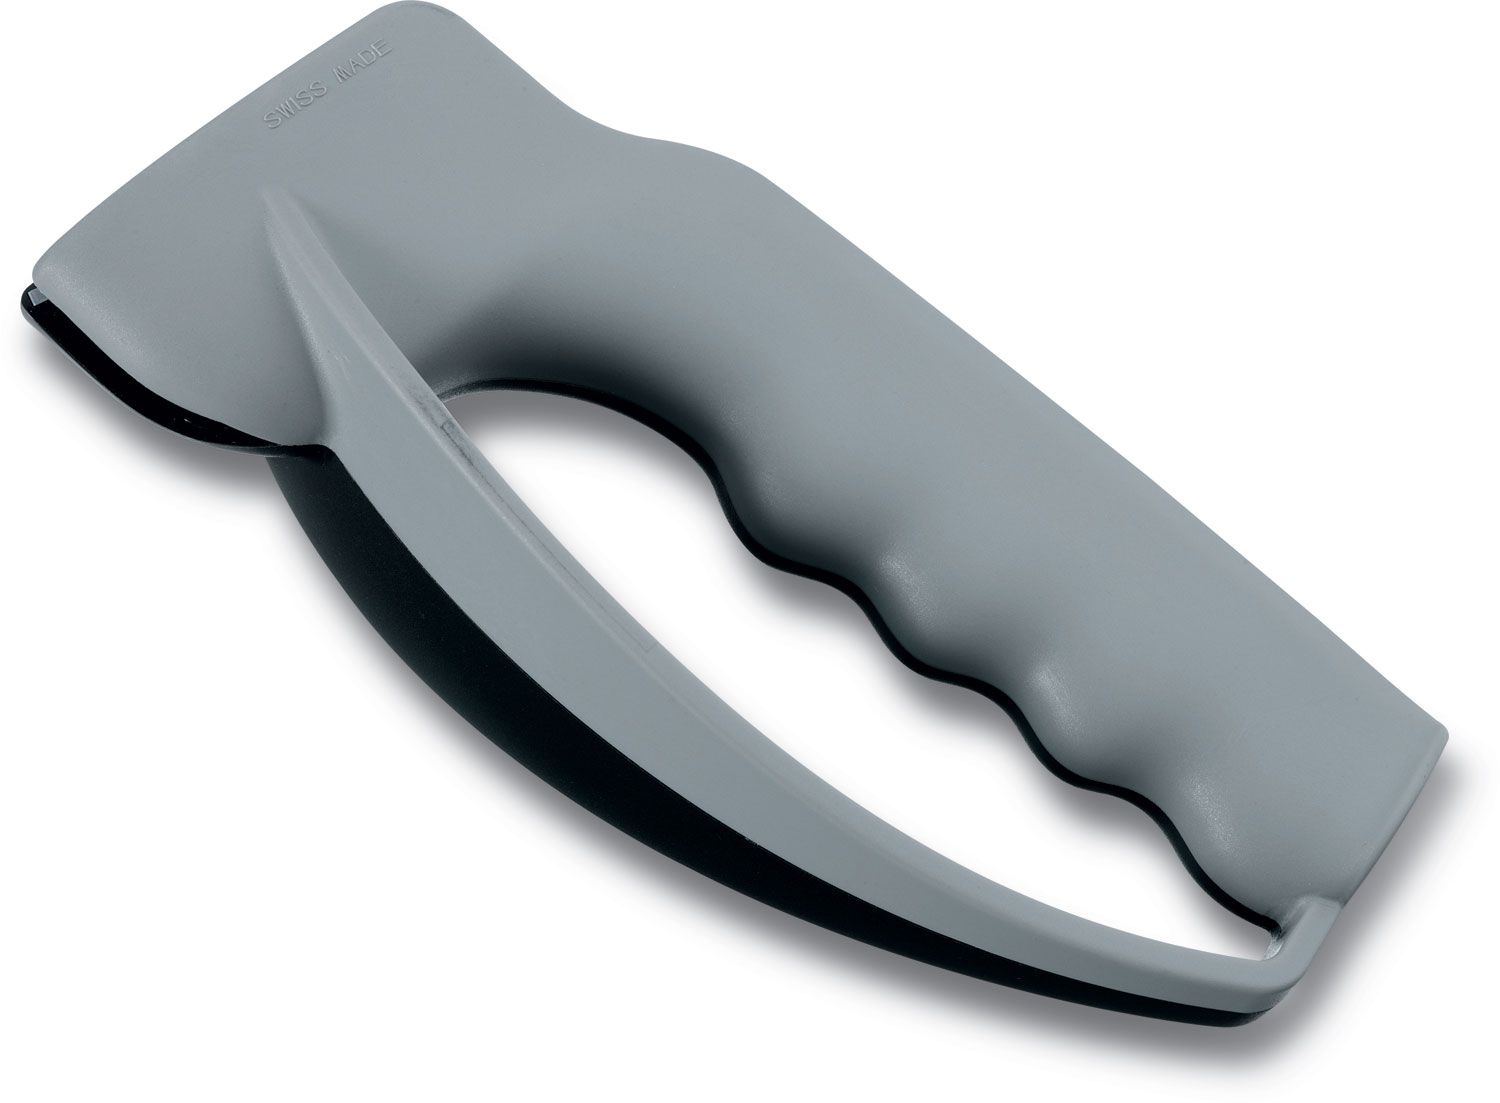 Work Sharp WSGPS-W Pocket Knife Sharpener - KnifeCenter